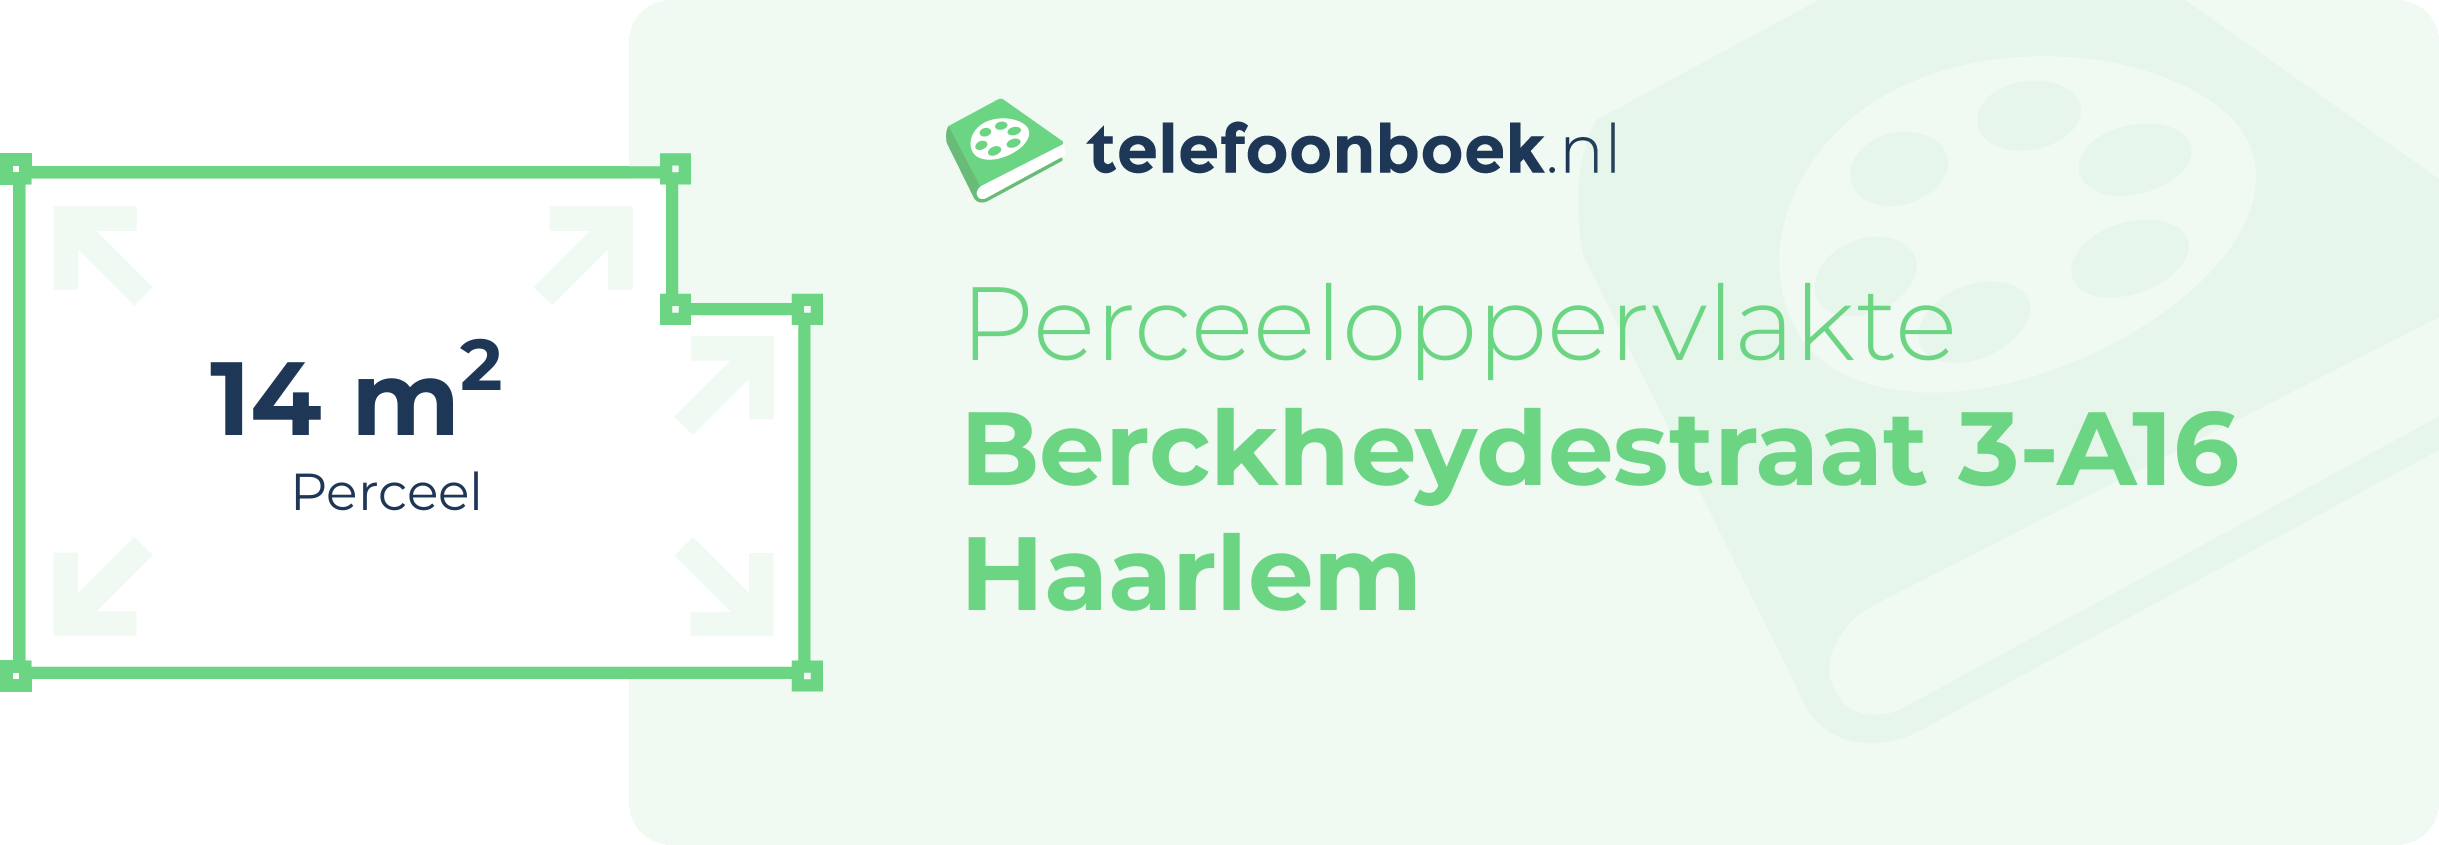 Perceeloppervlakte Berckheydestraat 3-A16 Haarlem